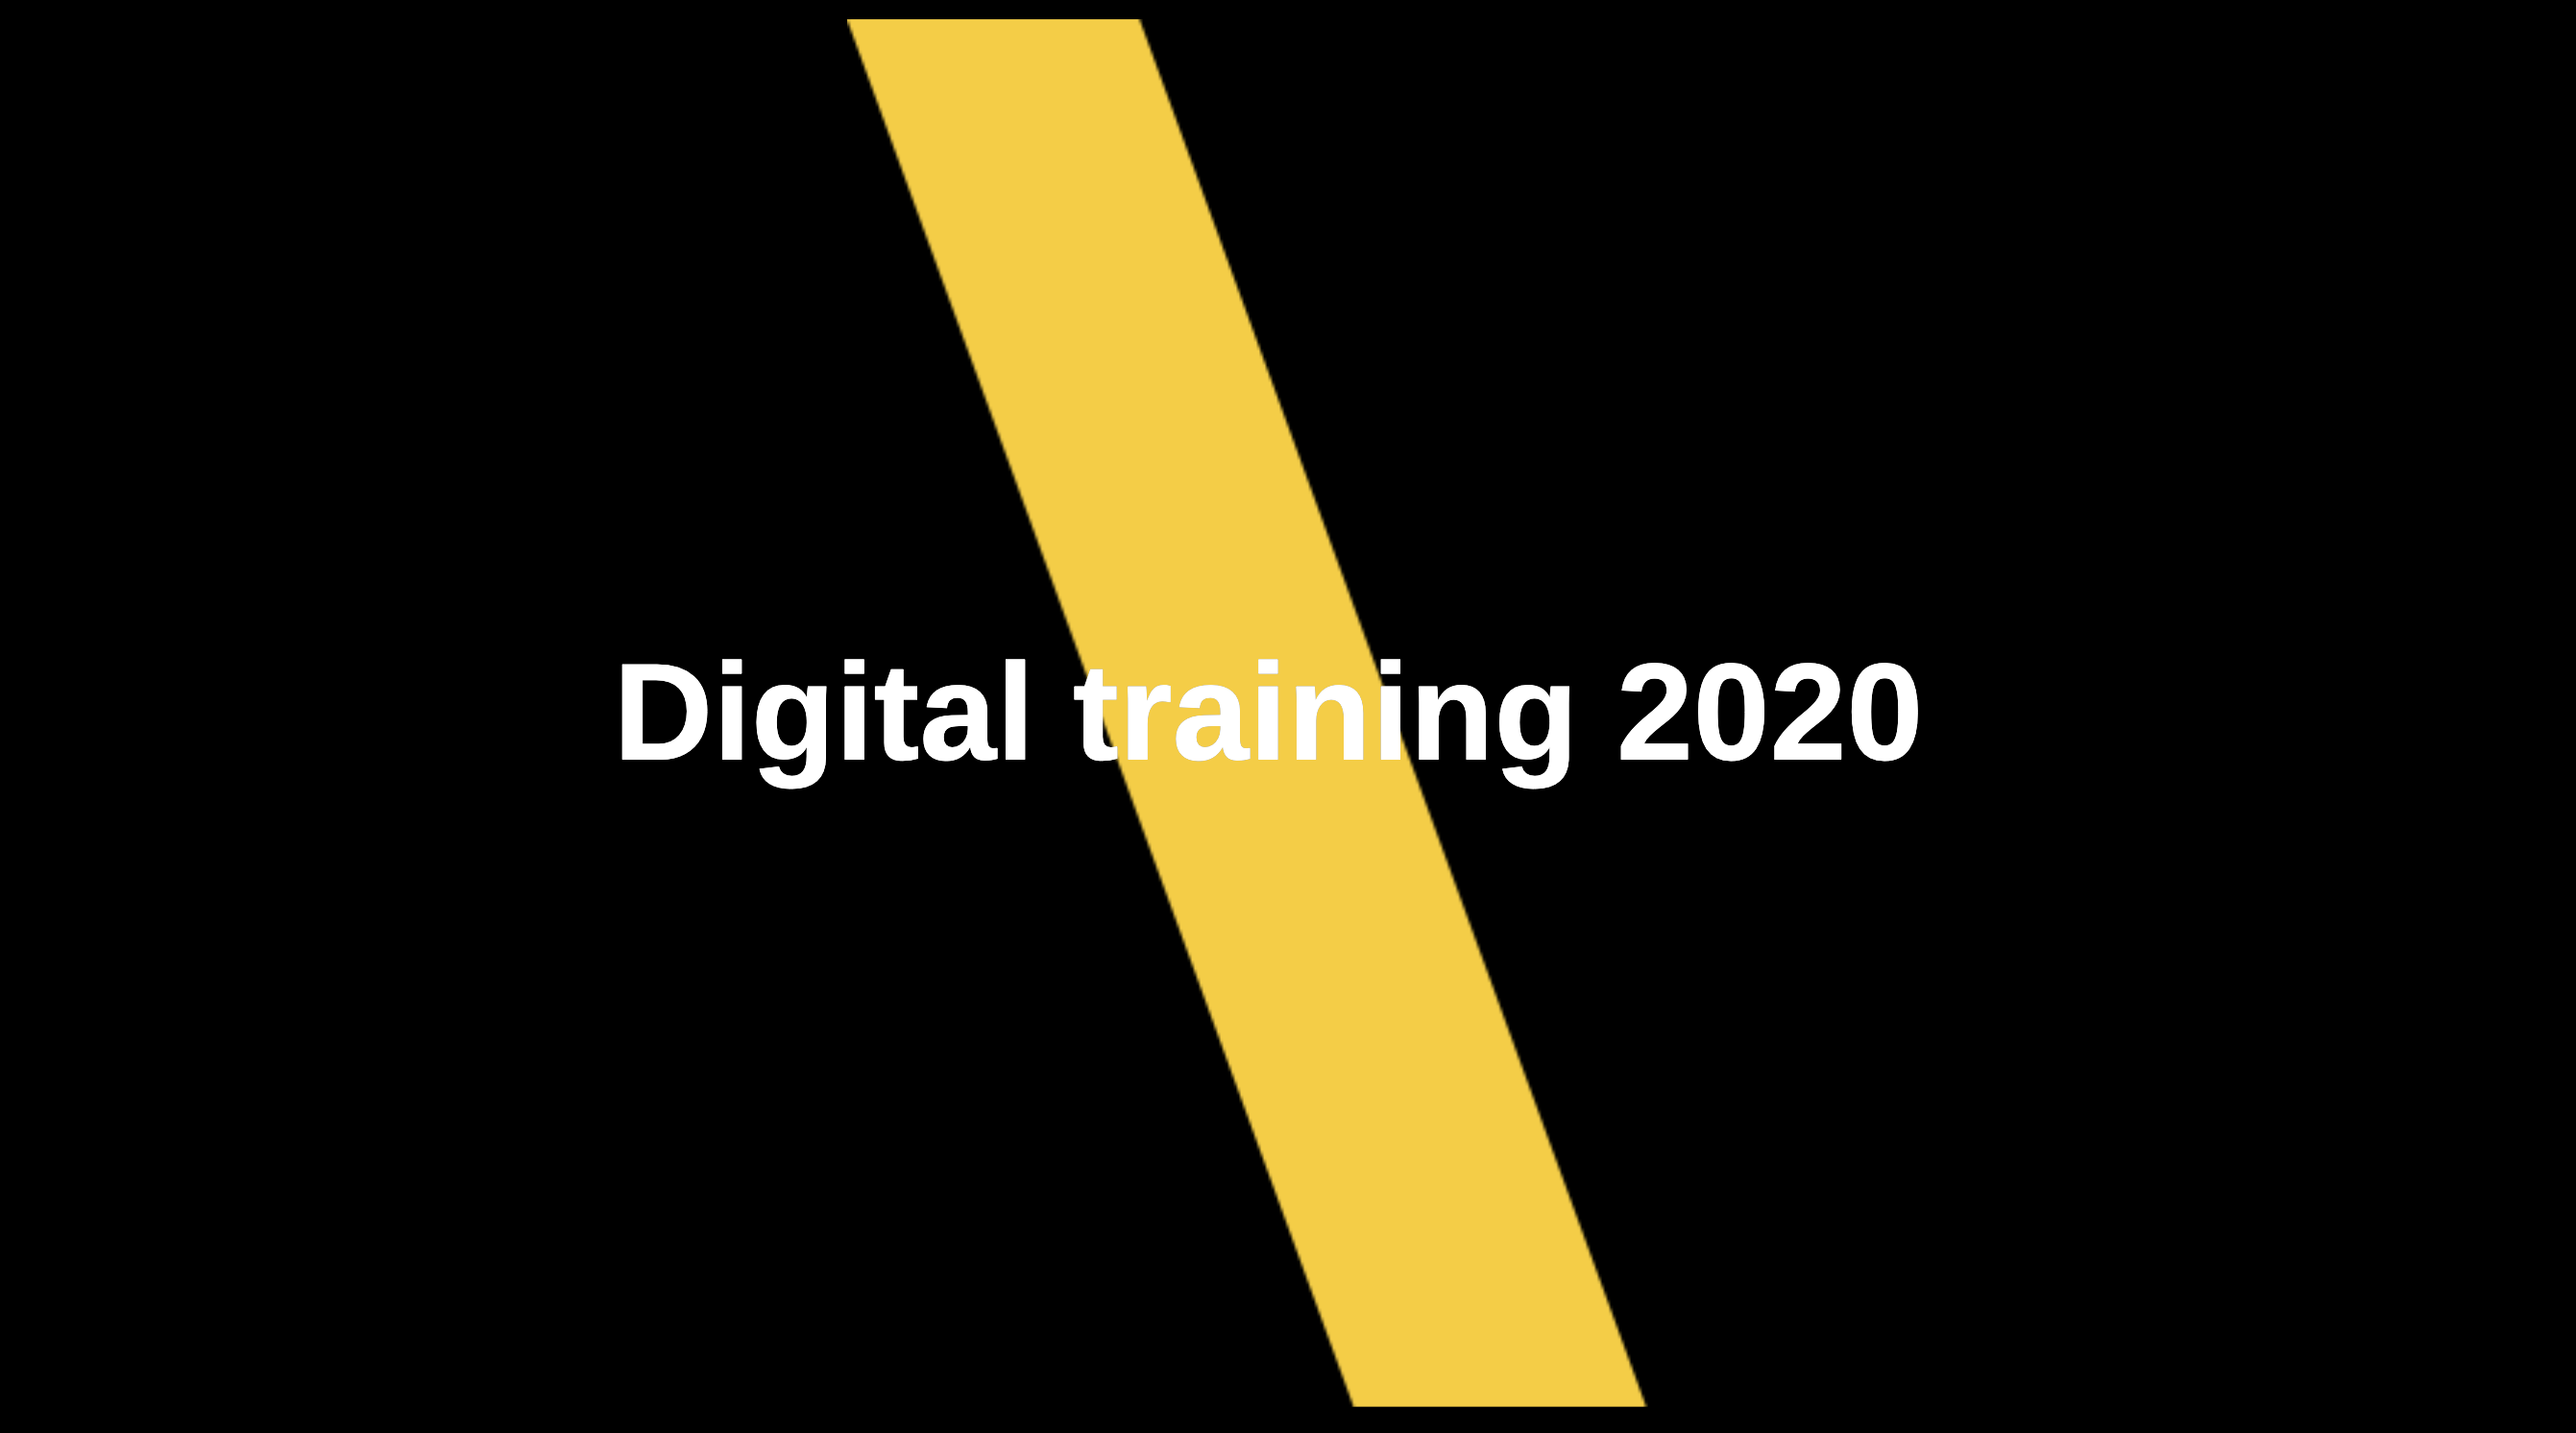 Digital training 2020